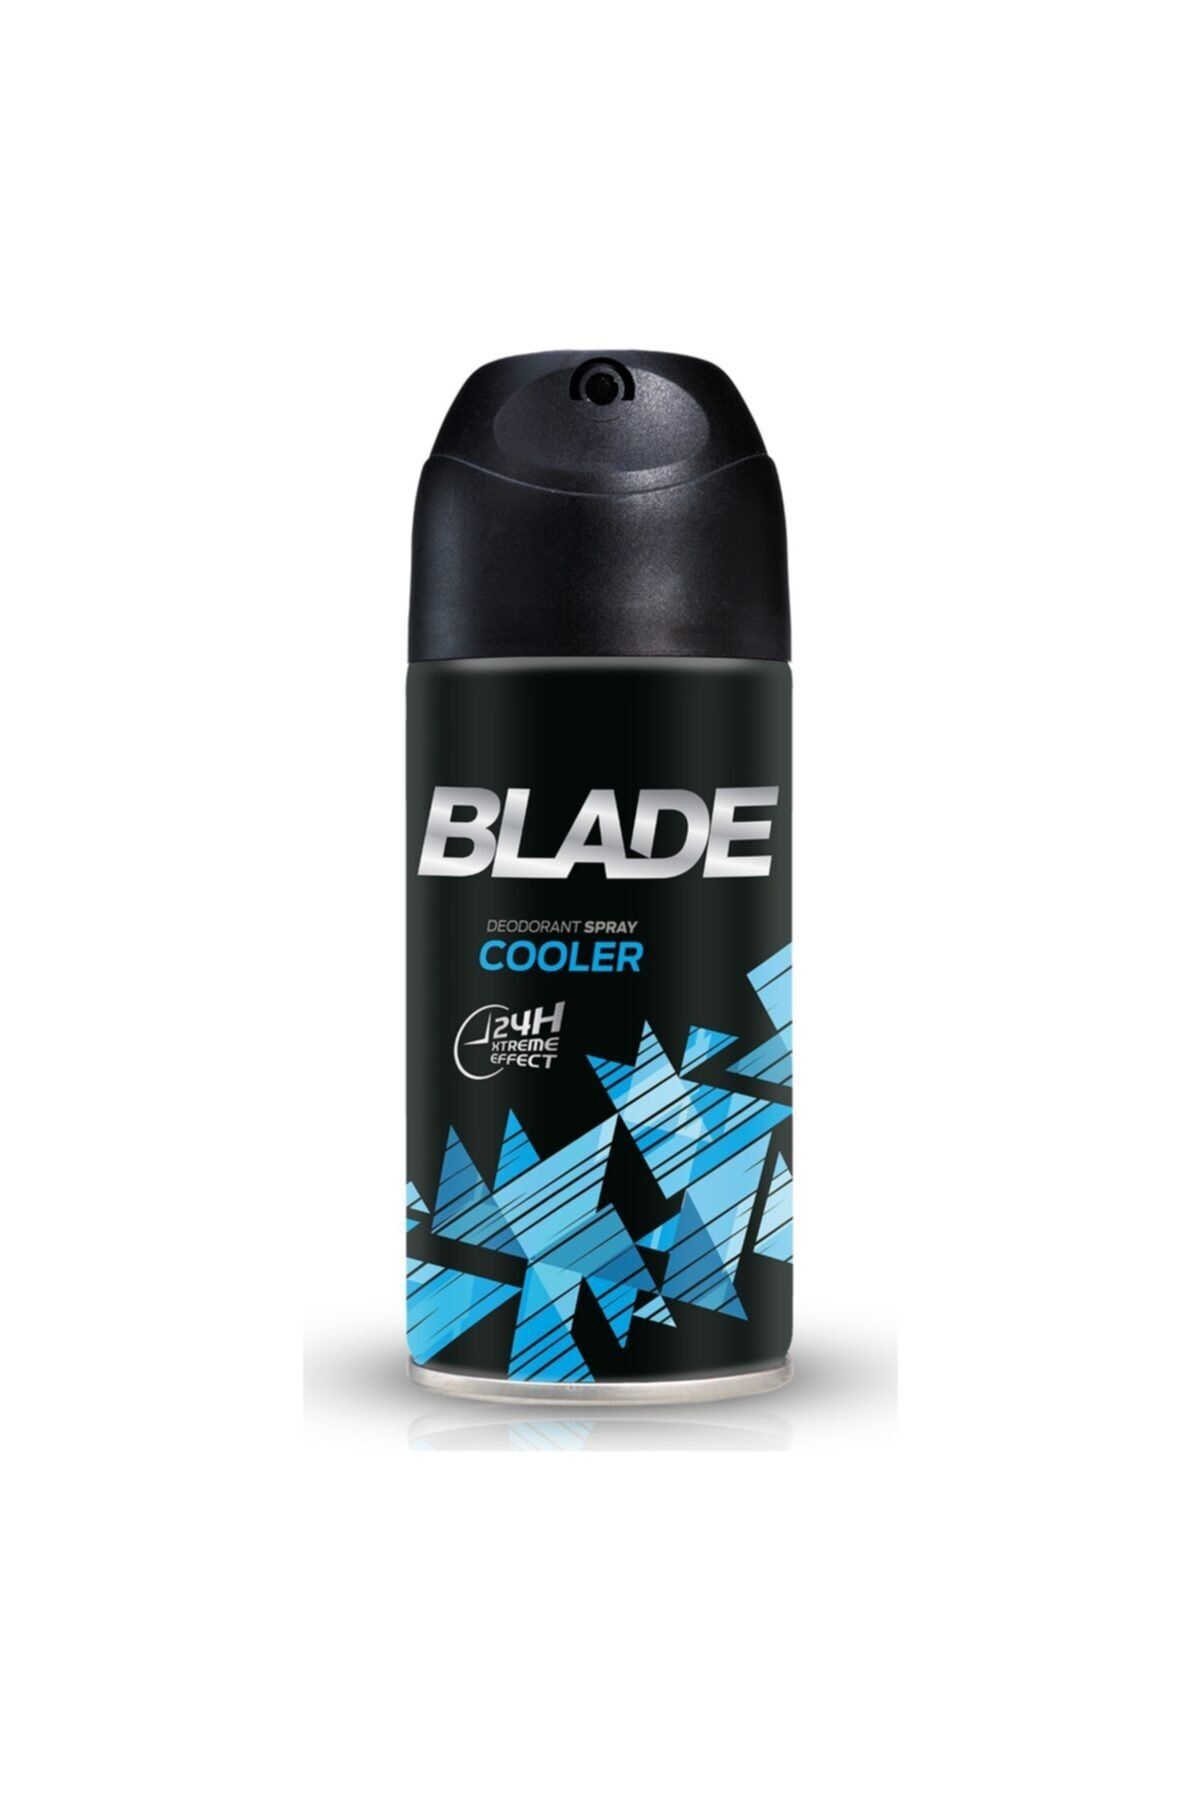 Blade Deodorant Cooler